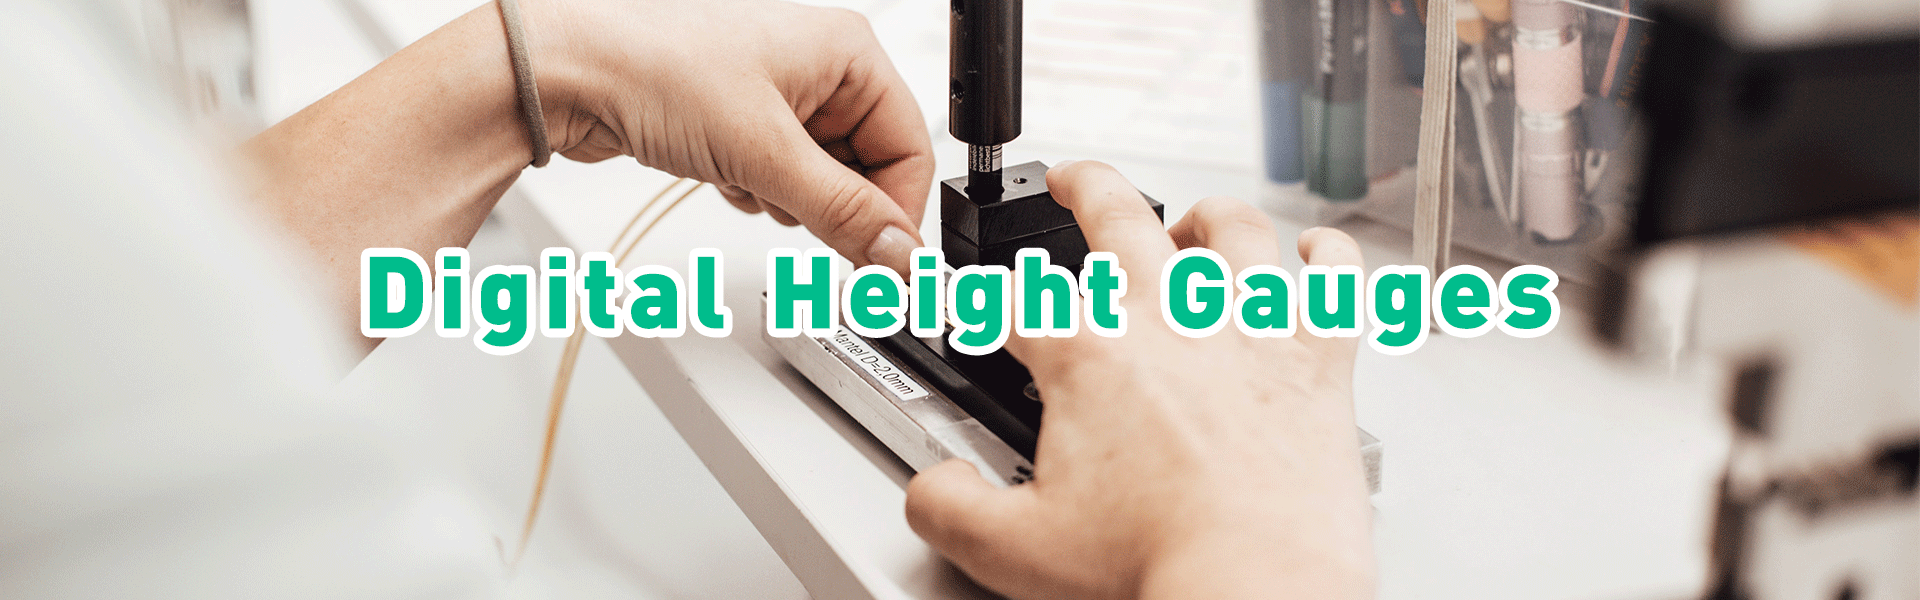 Digital Height Gauges